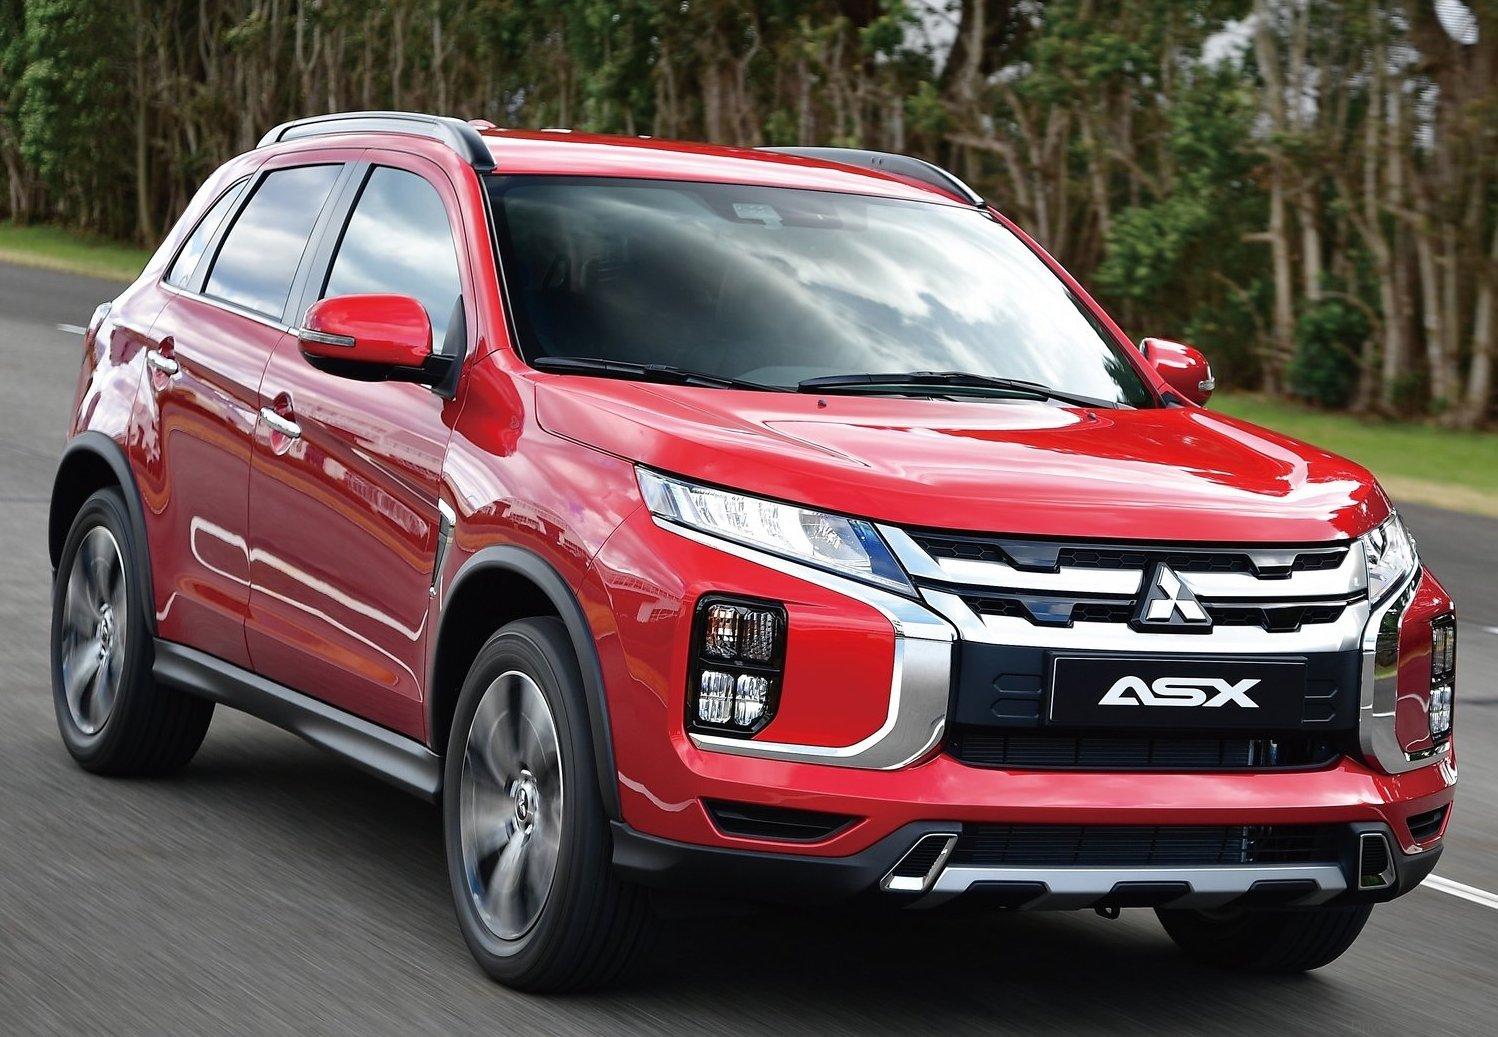 2020 Mitsubishi ASX uncovered before Geneva Motor Show